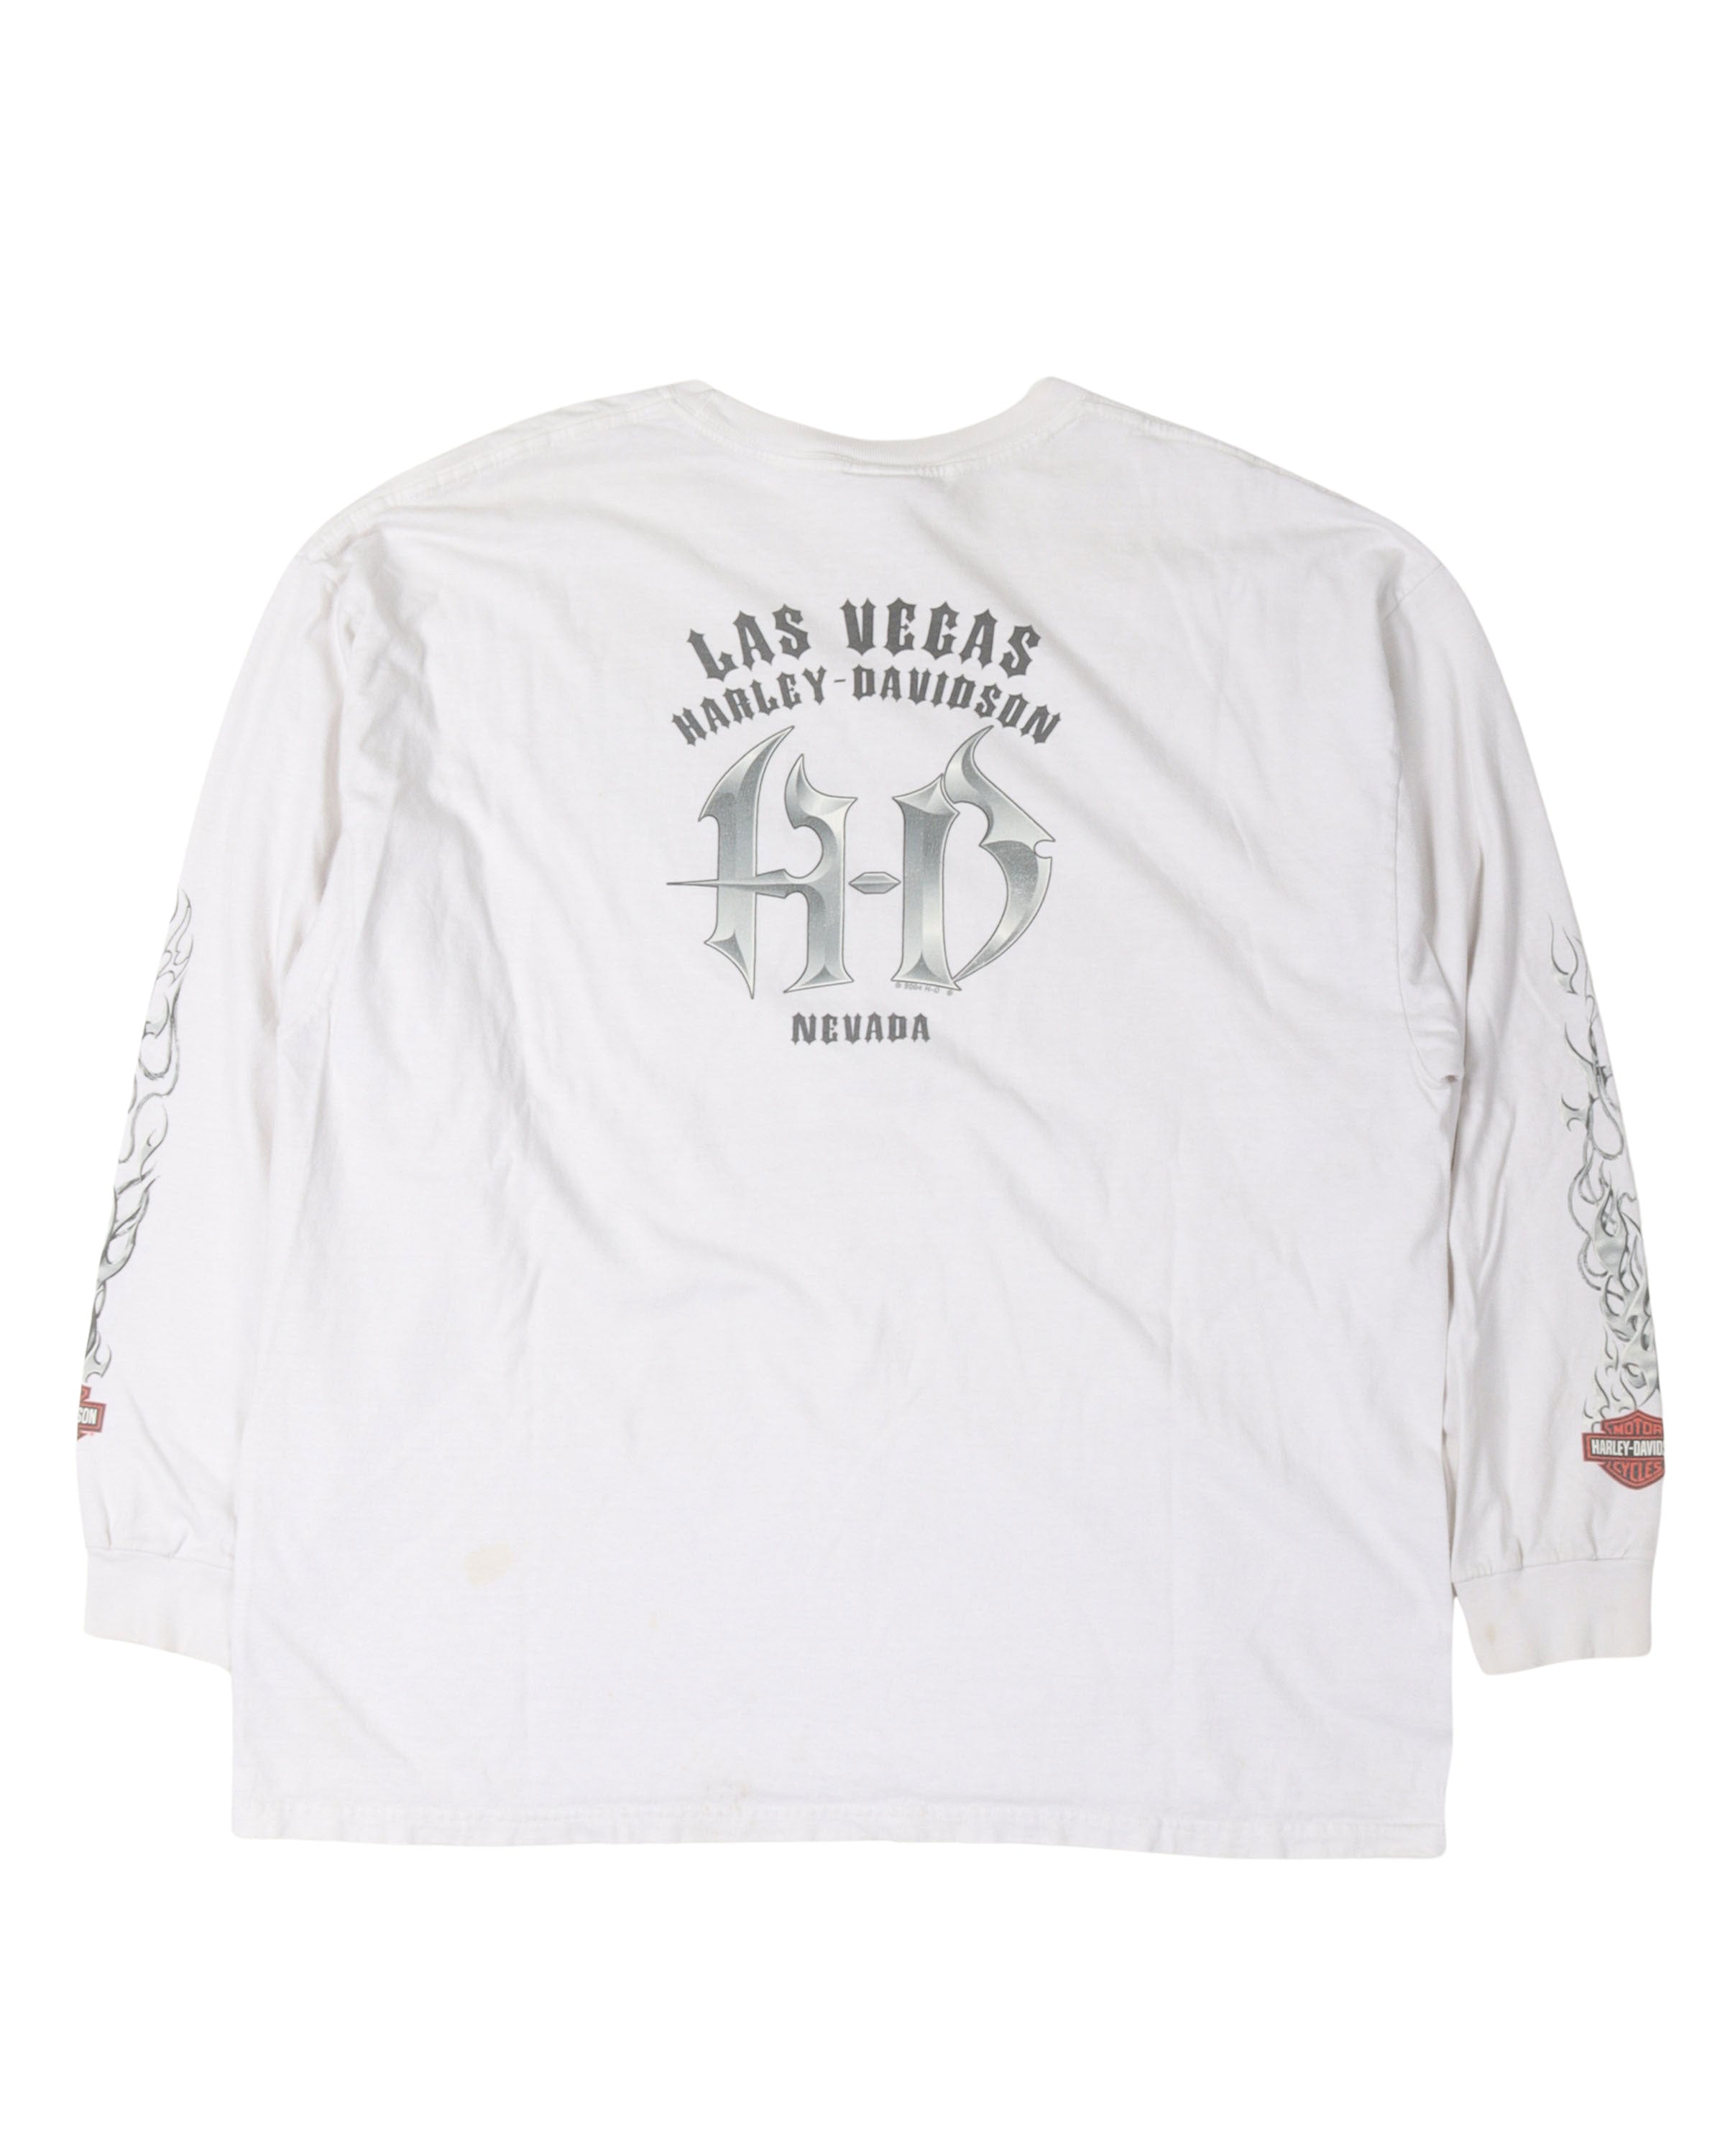 Harley Davidson Vegas Long Sleeve T-Shirt